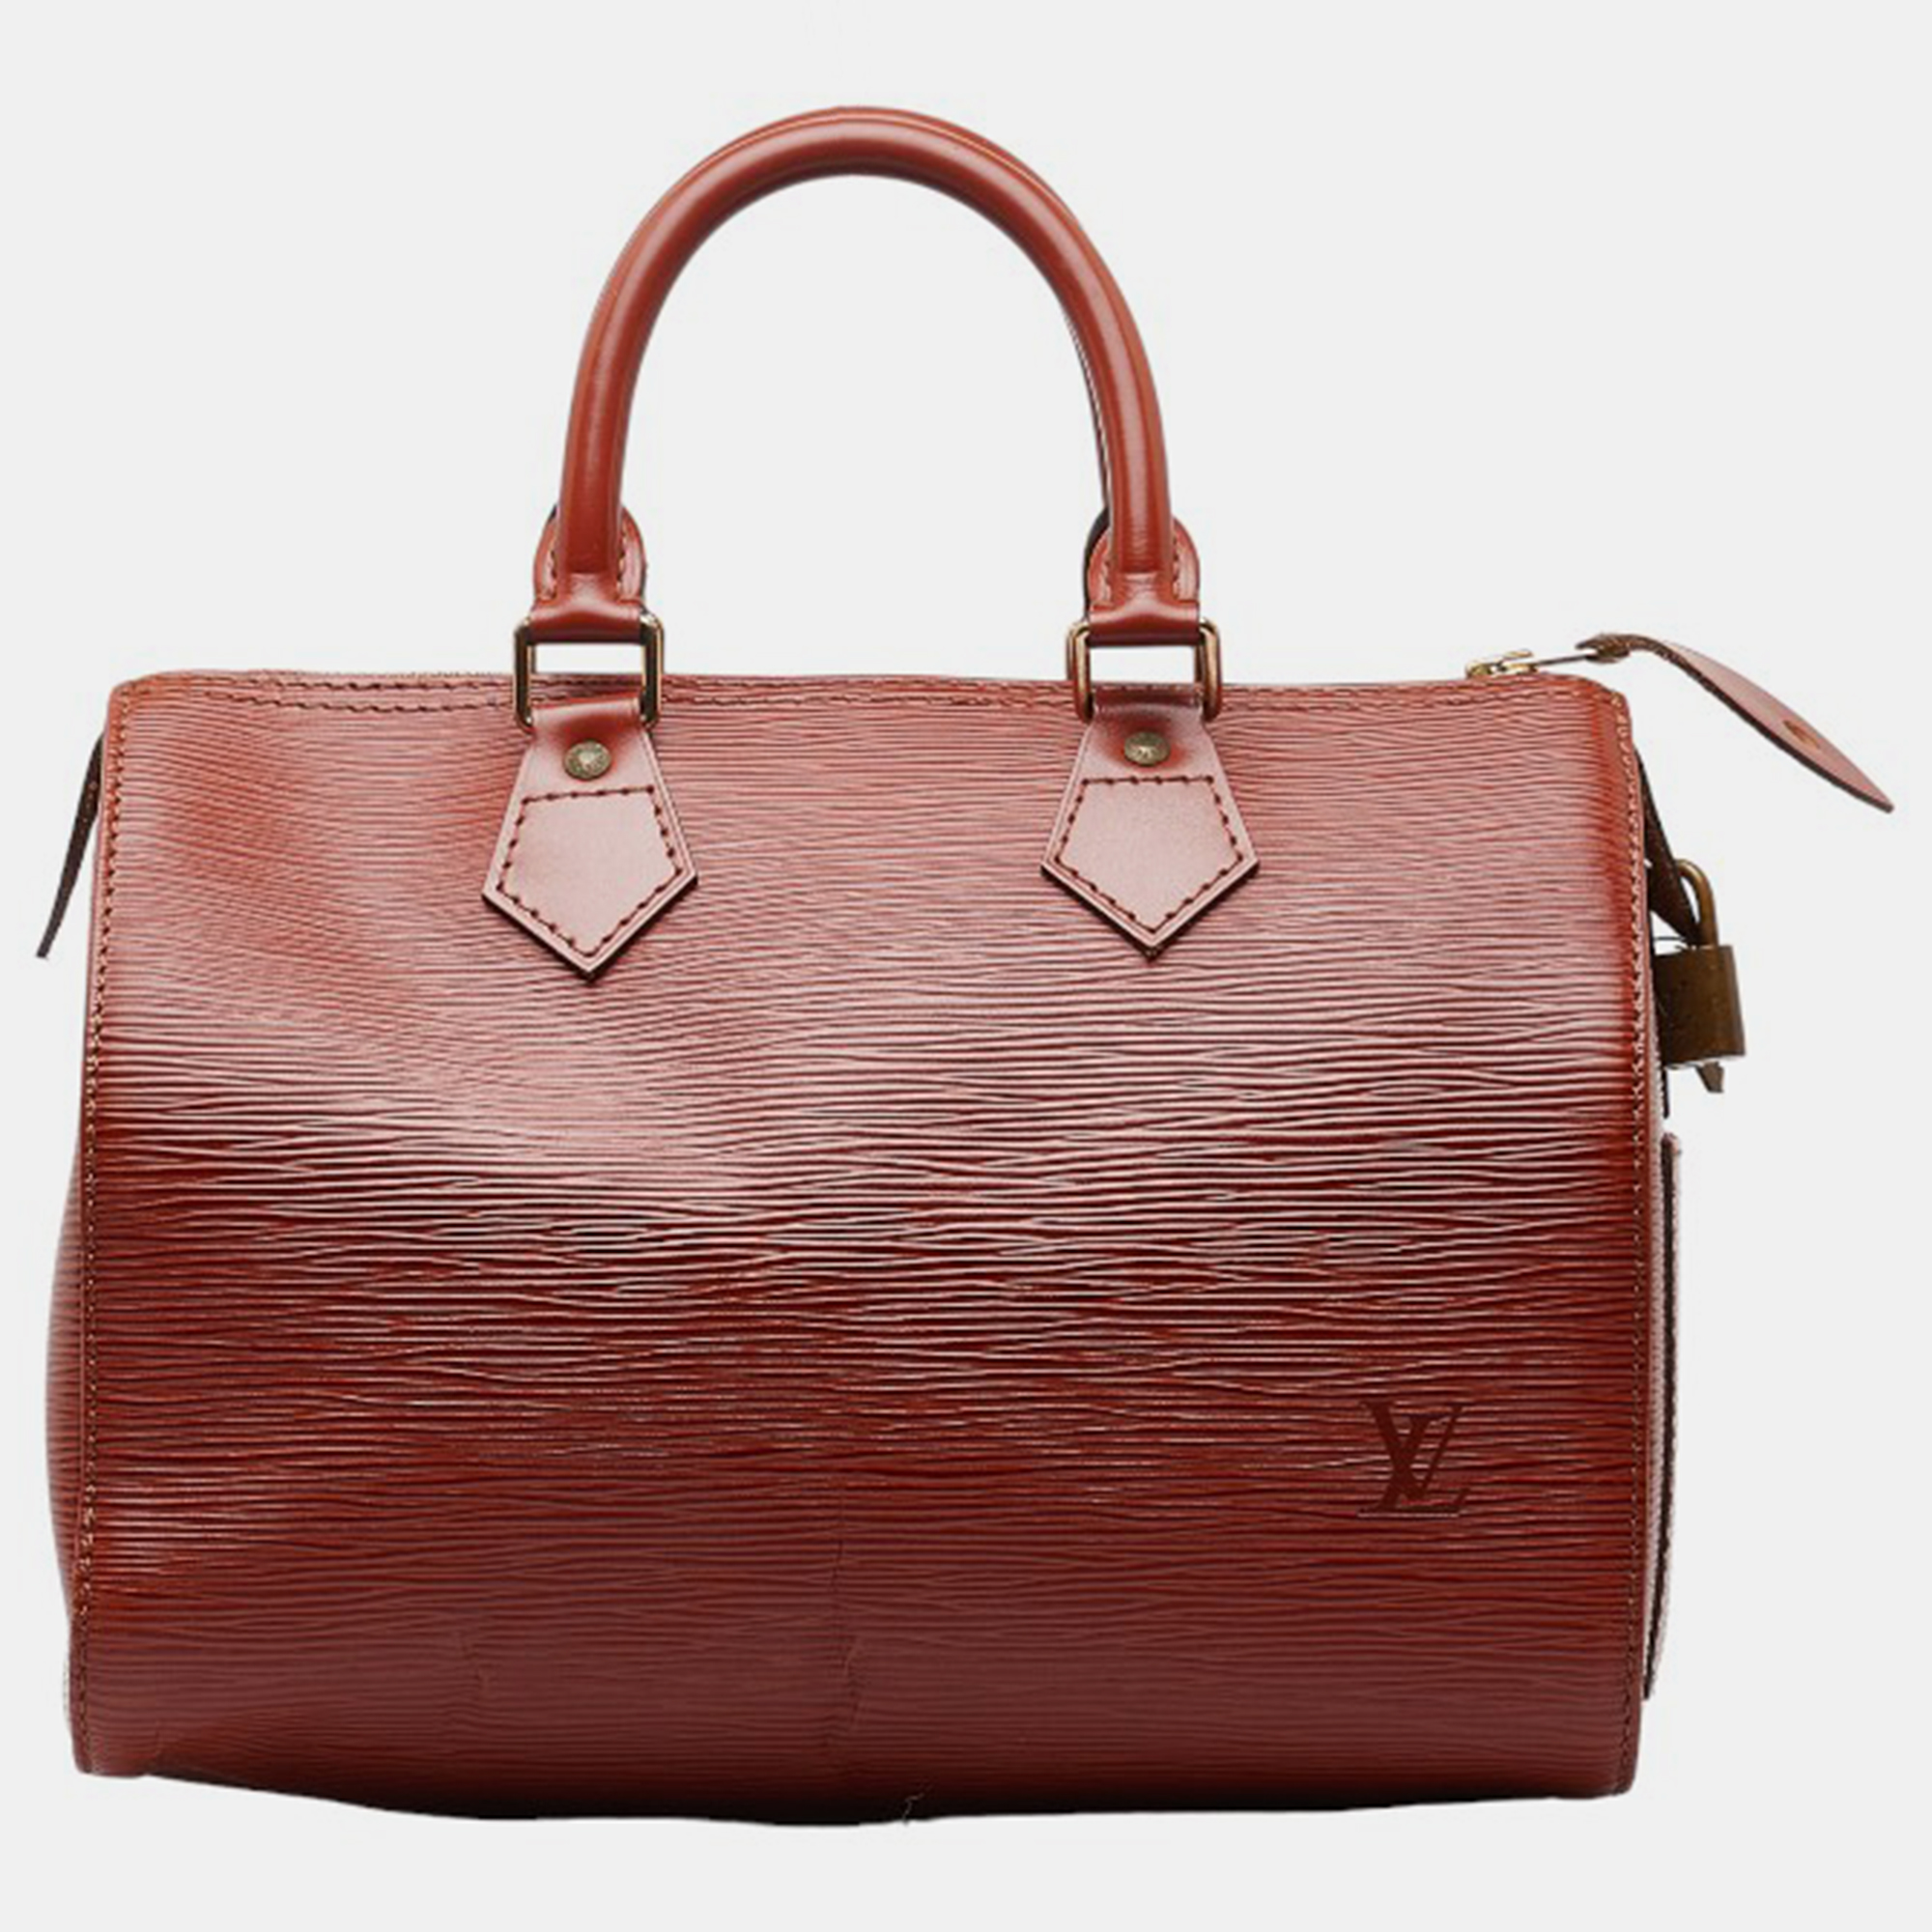 Louis vuitton brown leather 25 speedy satchel bag